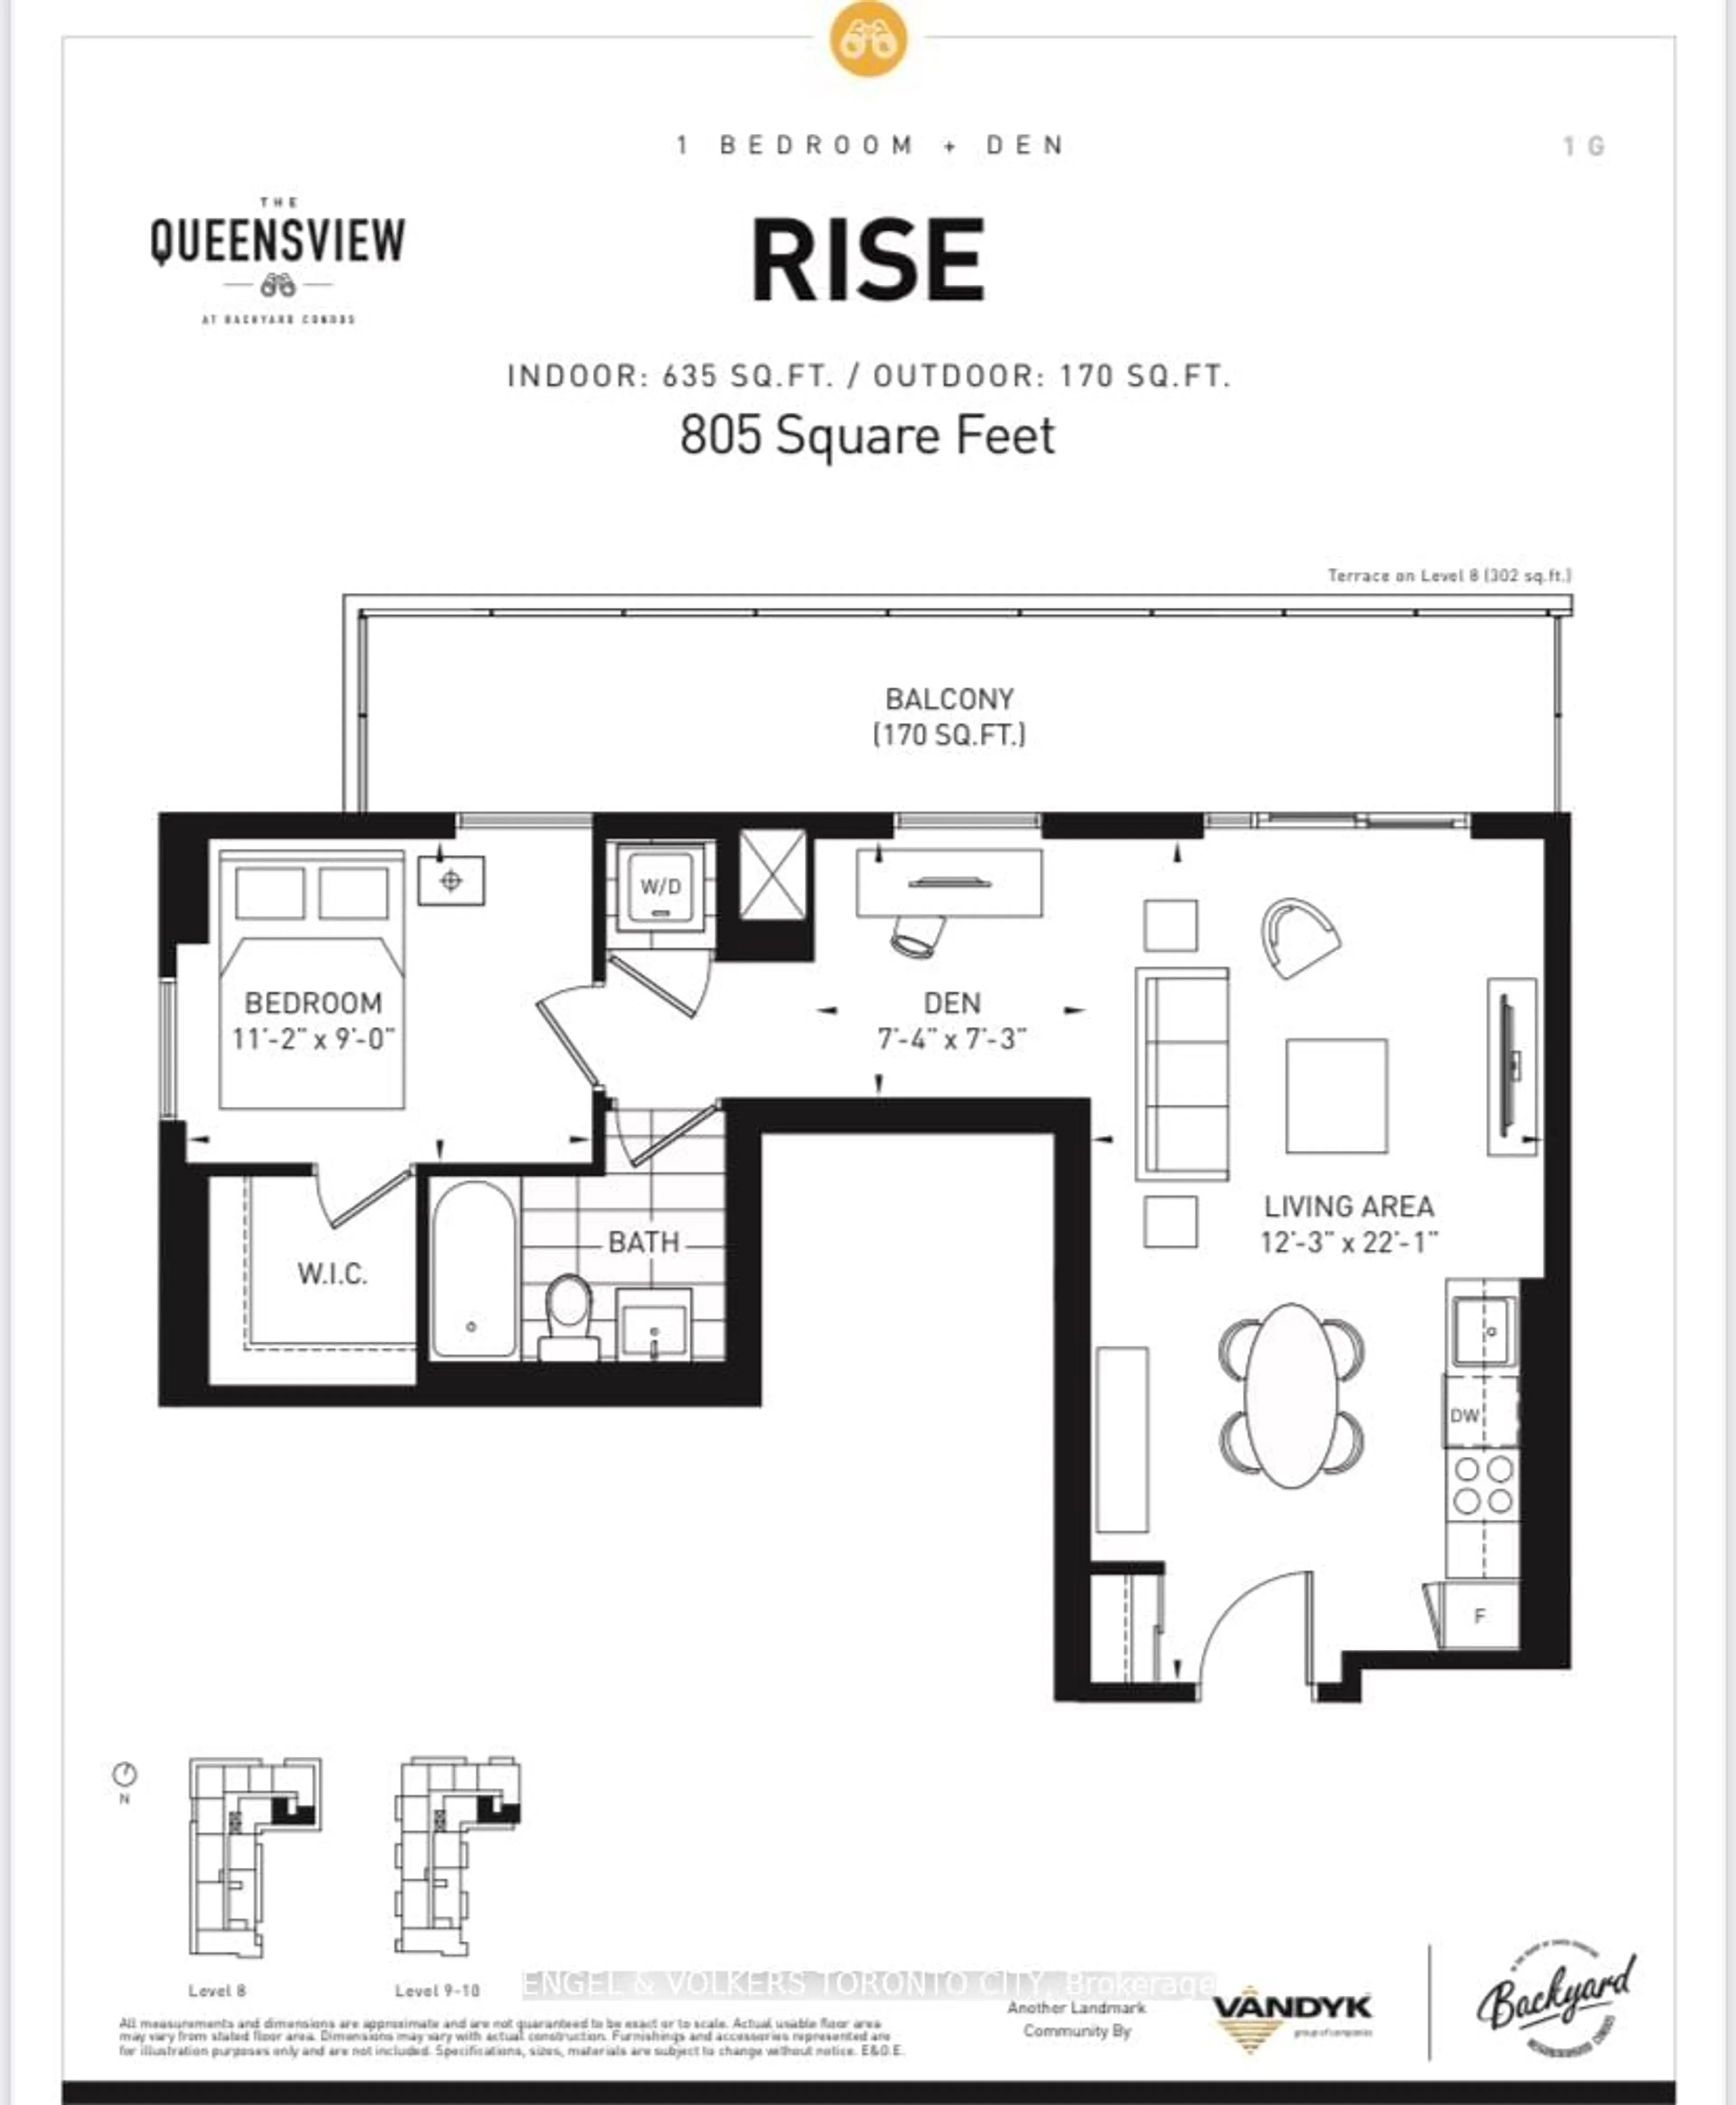 Floor plan for 25 Neighbourhood Lane #811, Toronto Ontario M8Y 0C4